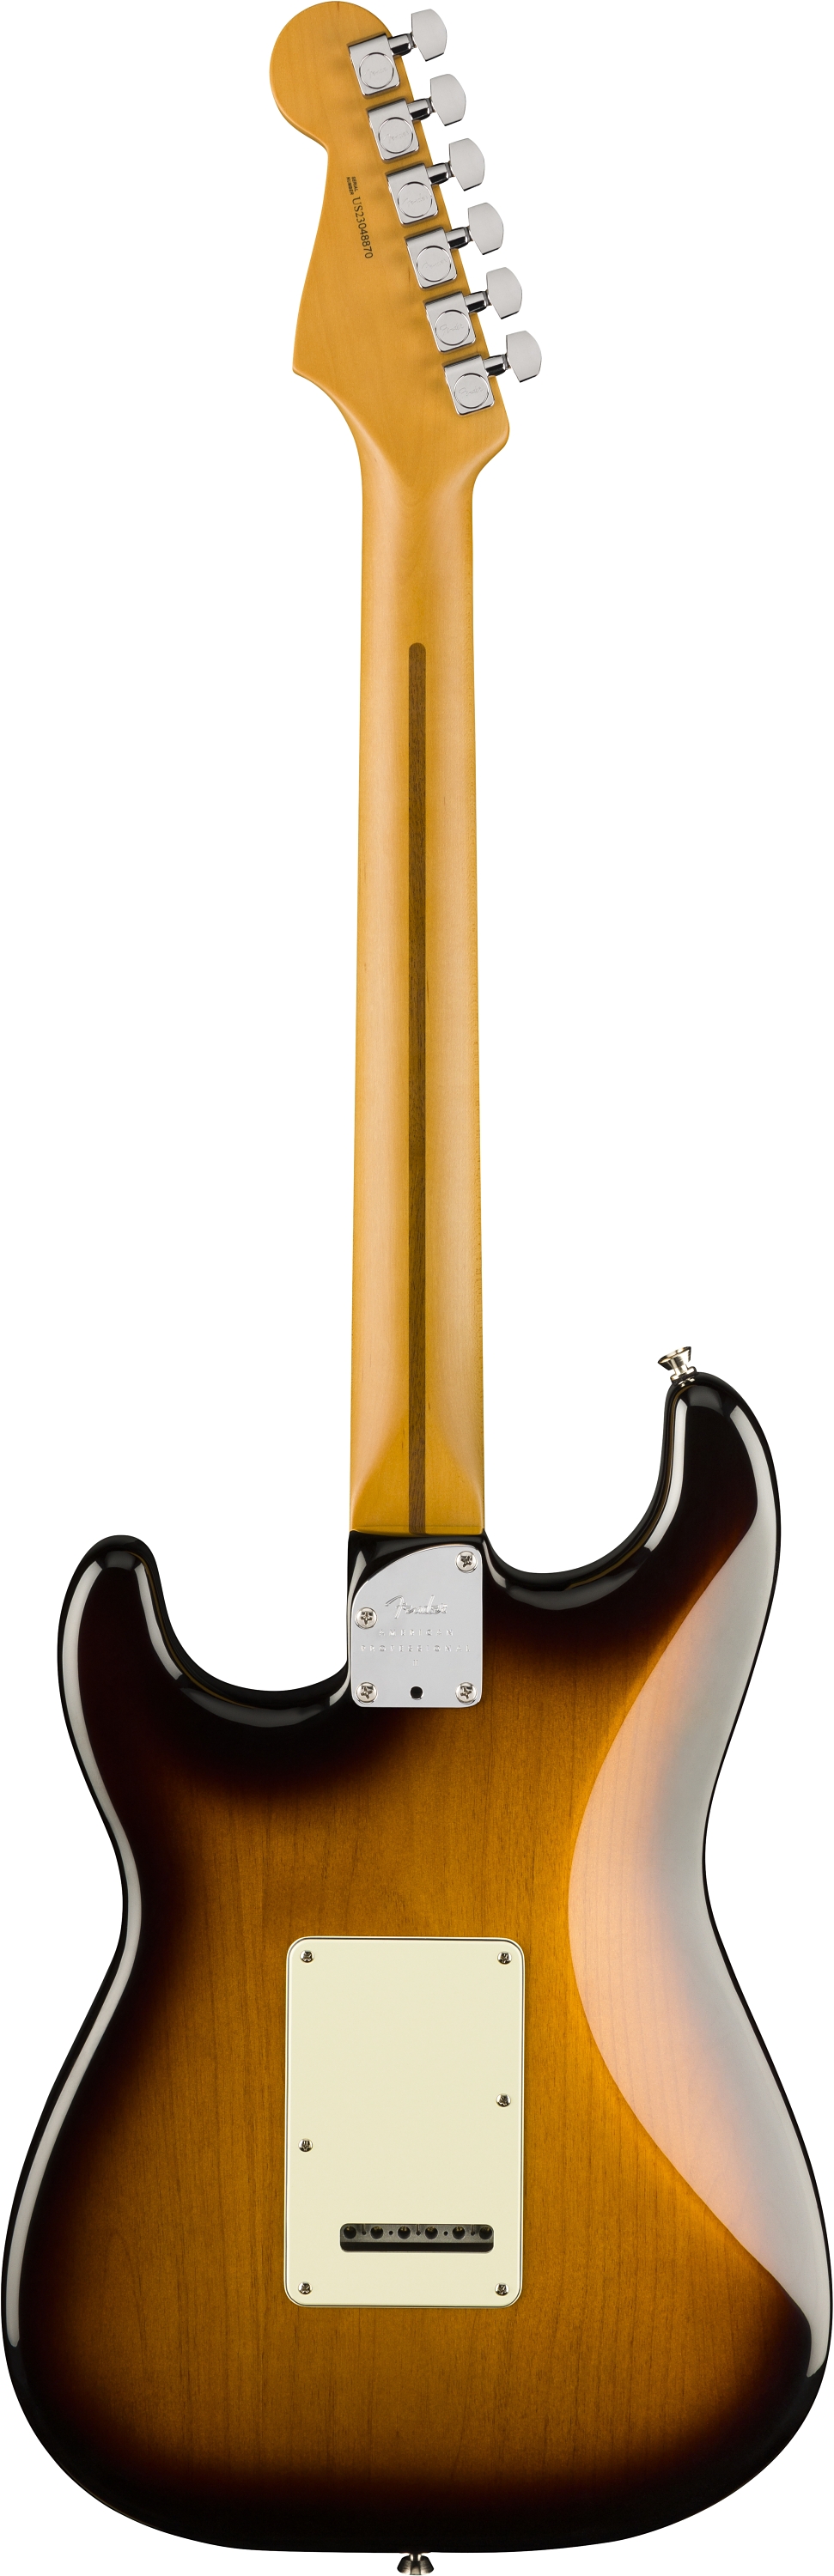 Fender Stratocaster American Pro Ii 70th Anniversary 3s Trem Mn - 2-color Sunburst - Str shape electric guitar - Variation 1